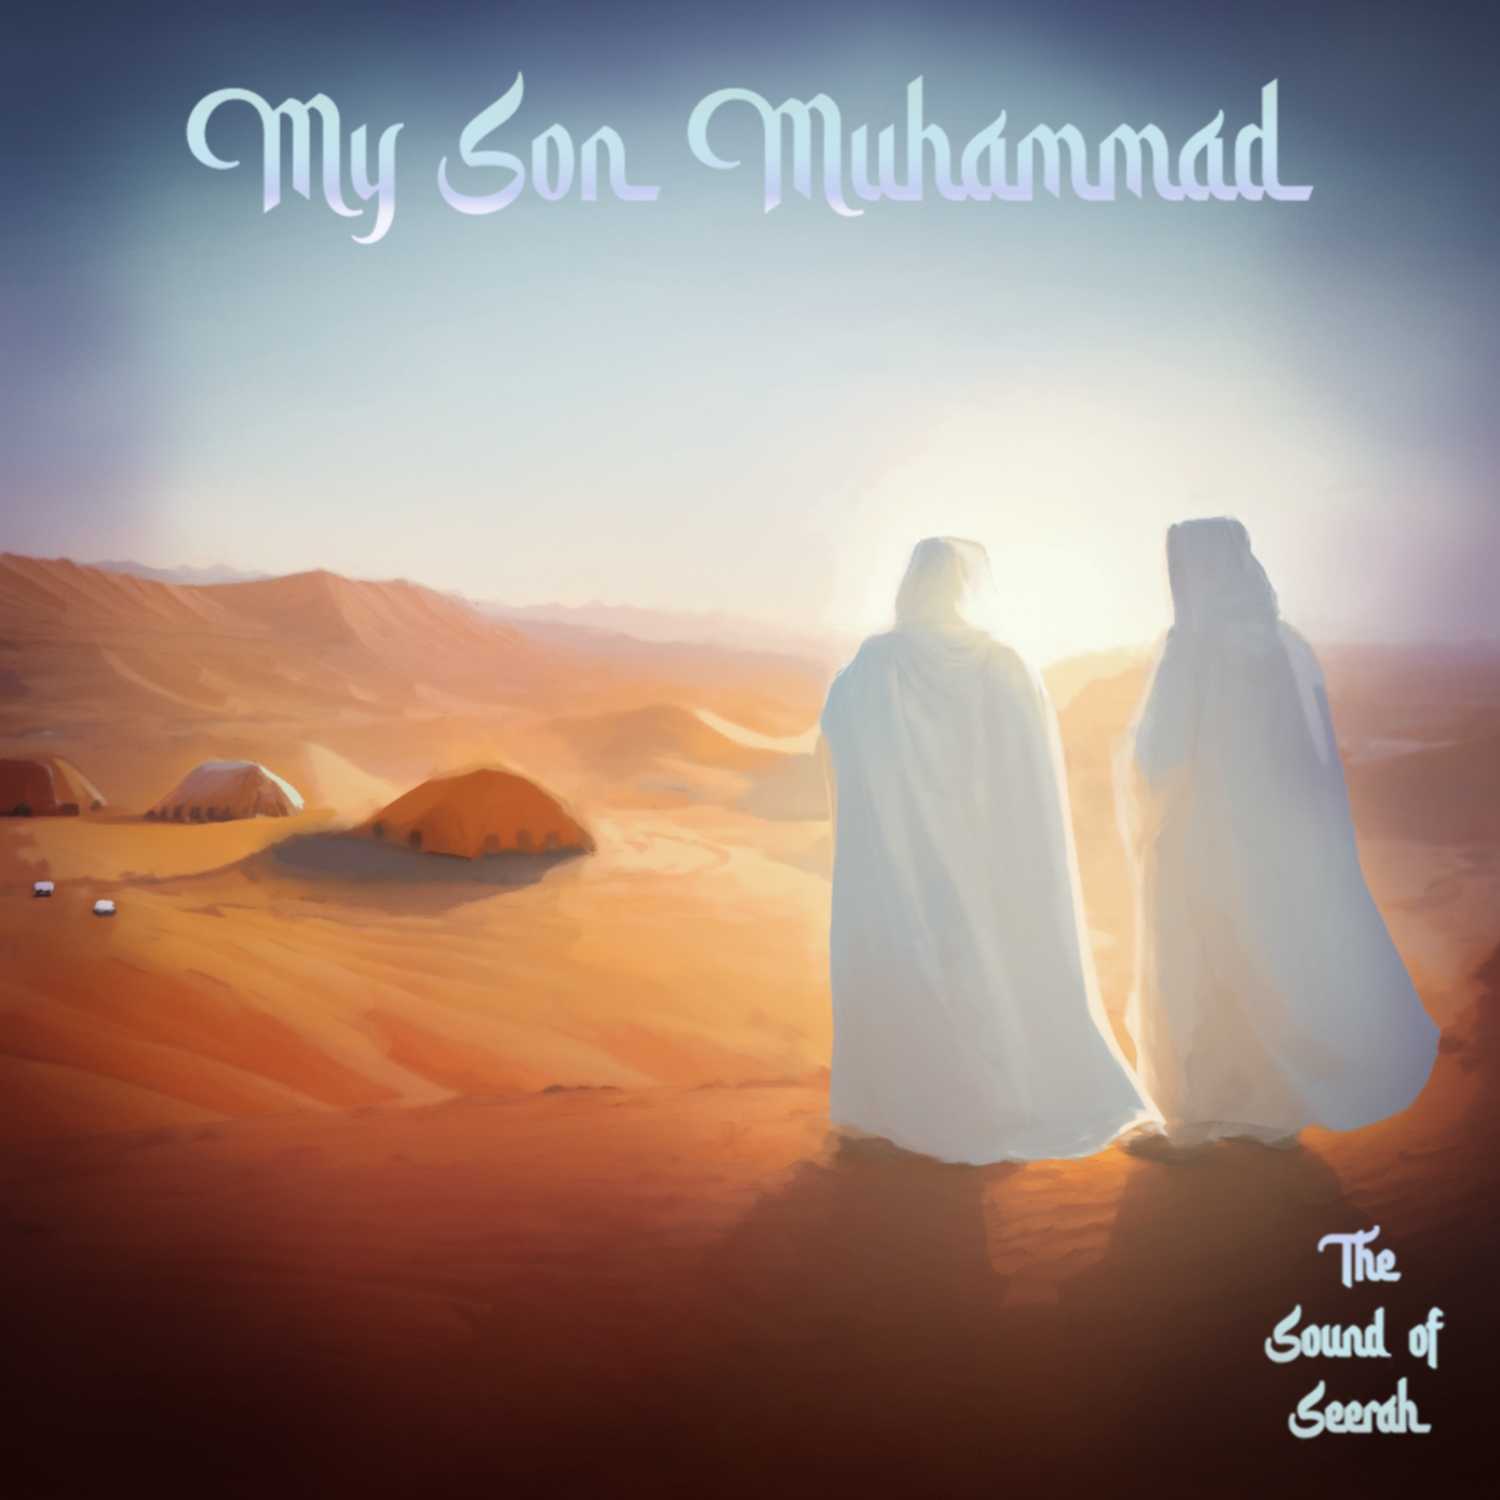 Chapter 1: My Son Muhammad